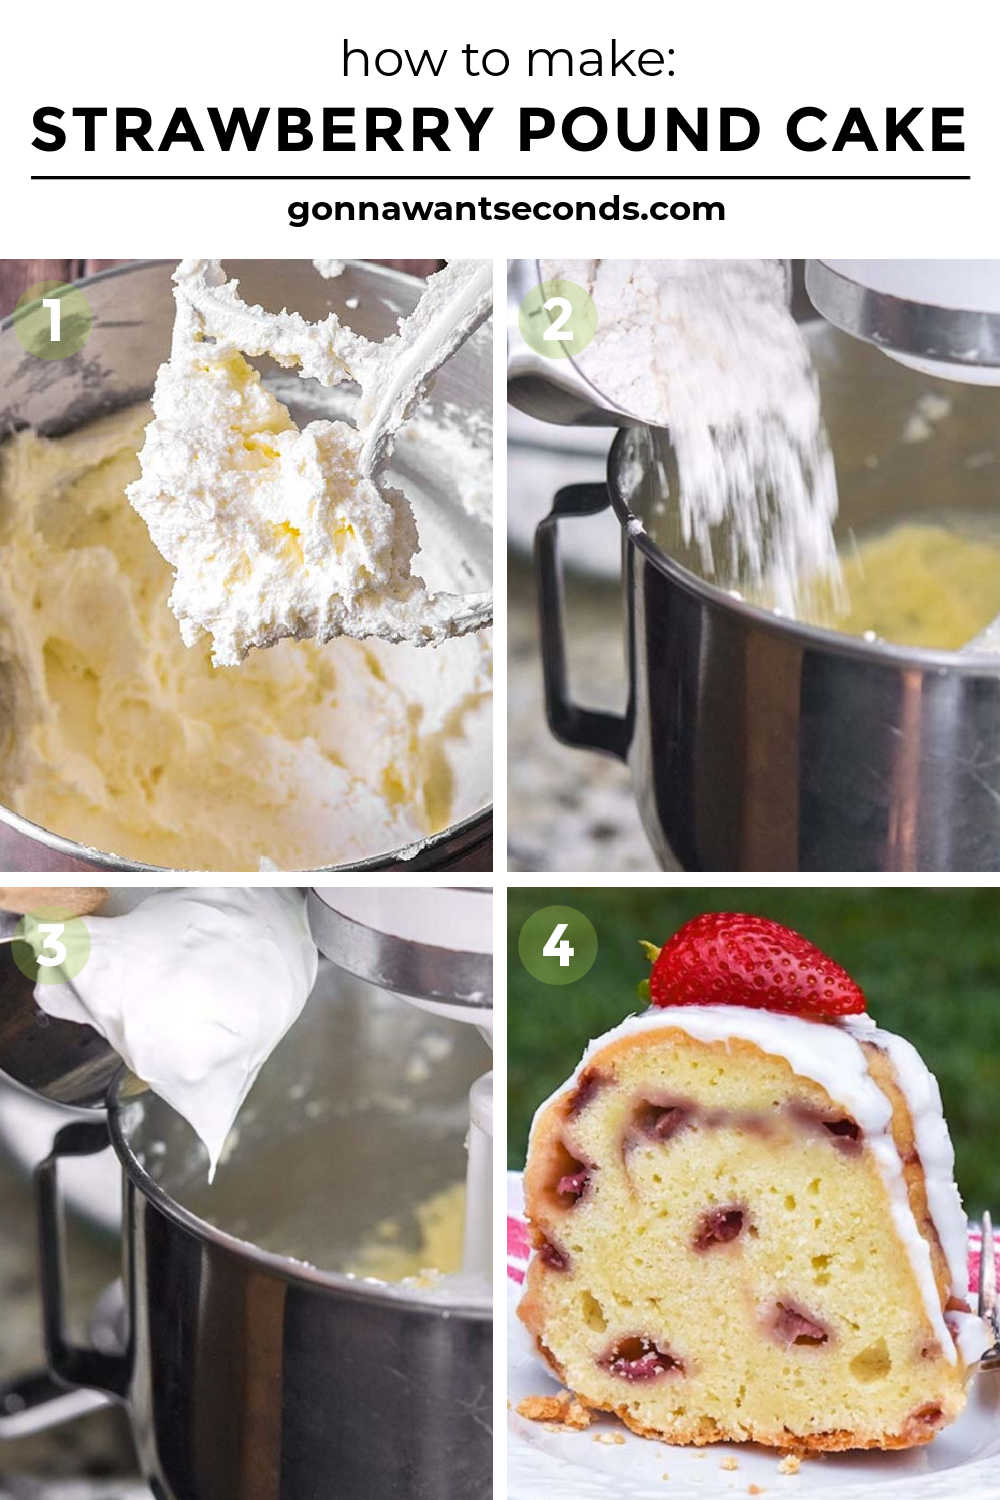 Step by step how to make strawberry pound cake